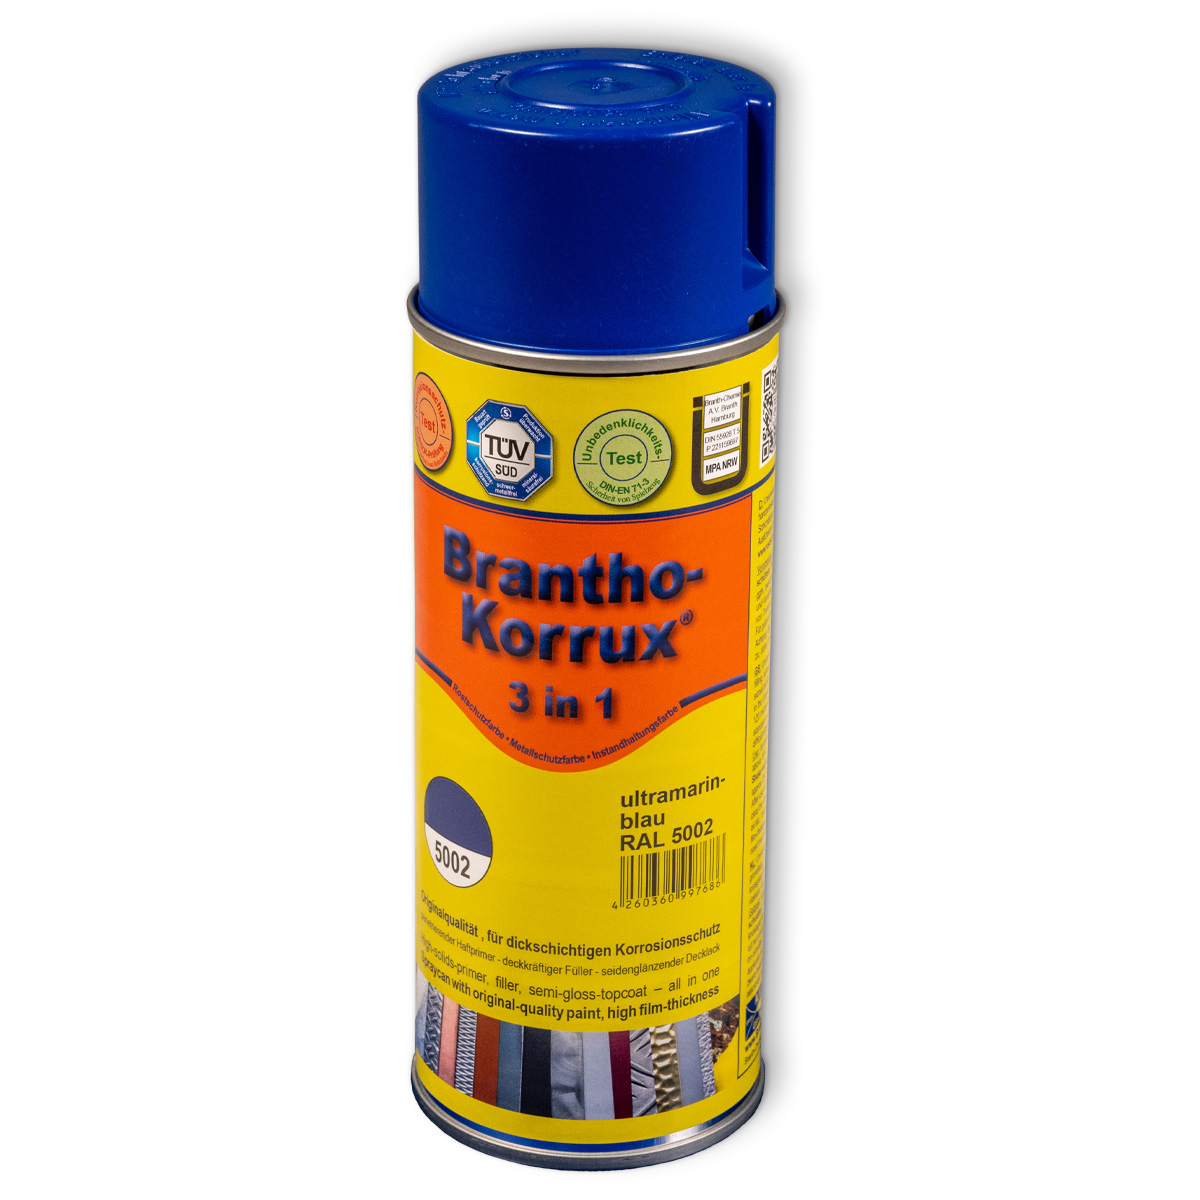 Brantho-Korrux "3 in 1"-Komfortdose RAL 5002 ultramarinblau 400 ml